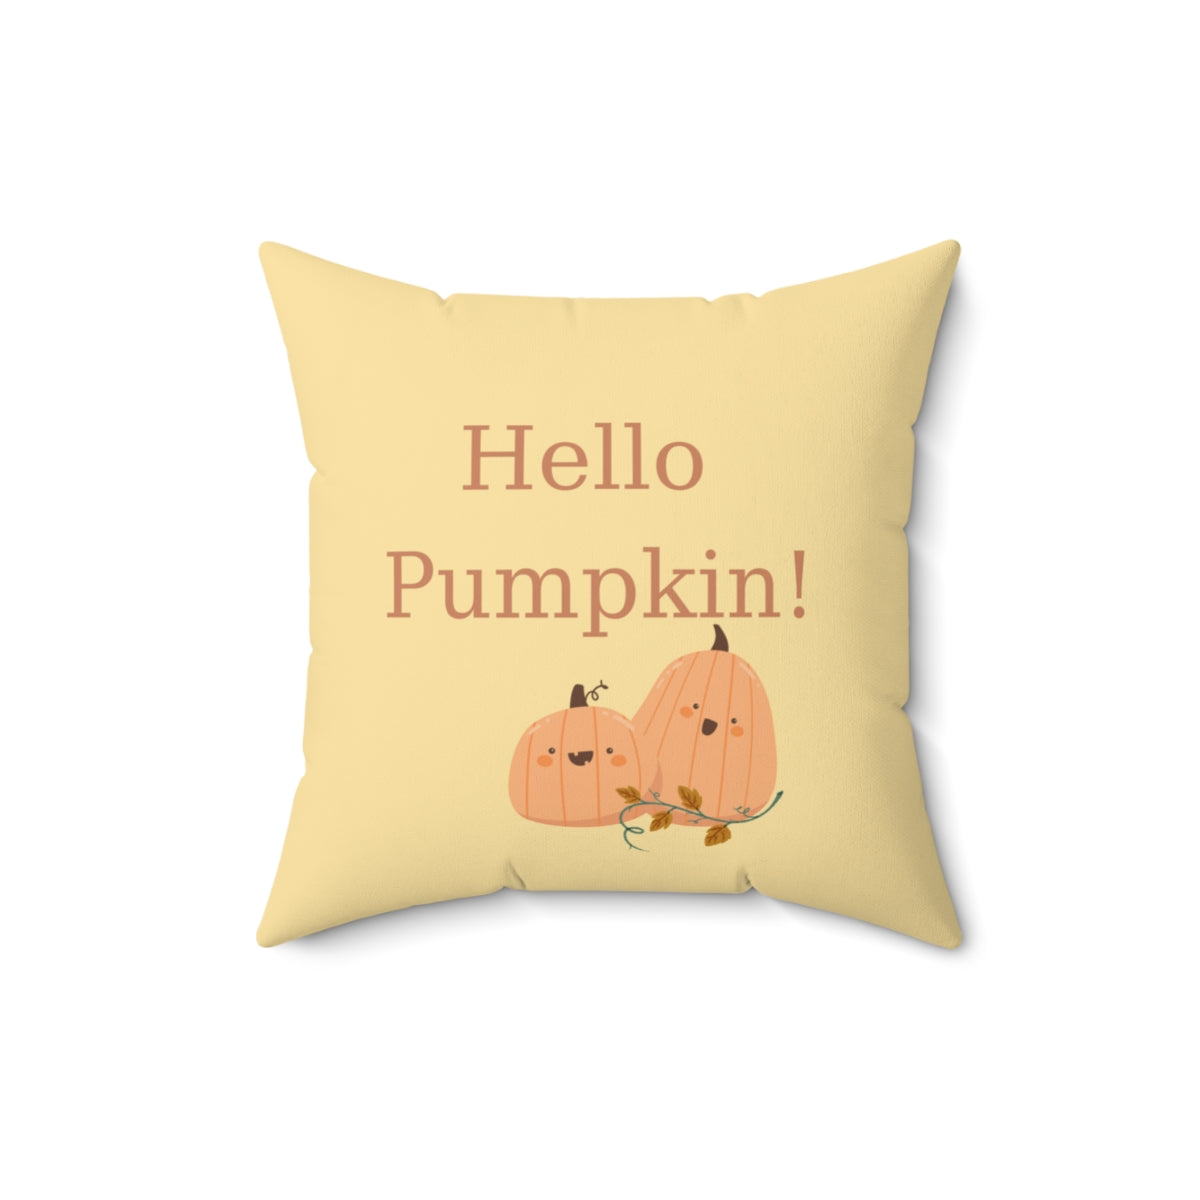 Hello Pumpkin! Polyester Square Pillow Case